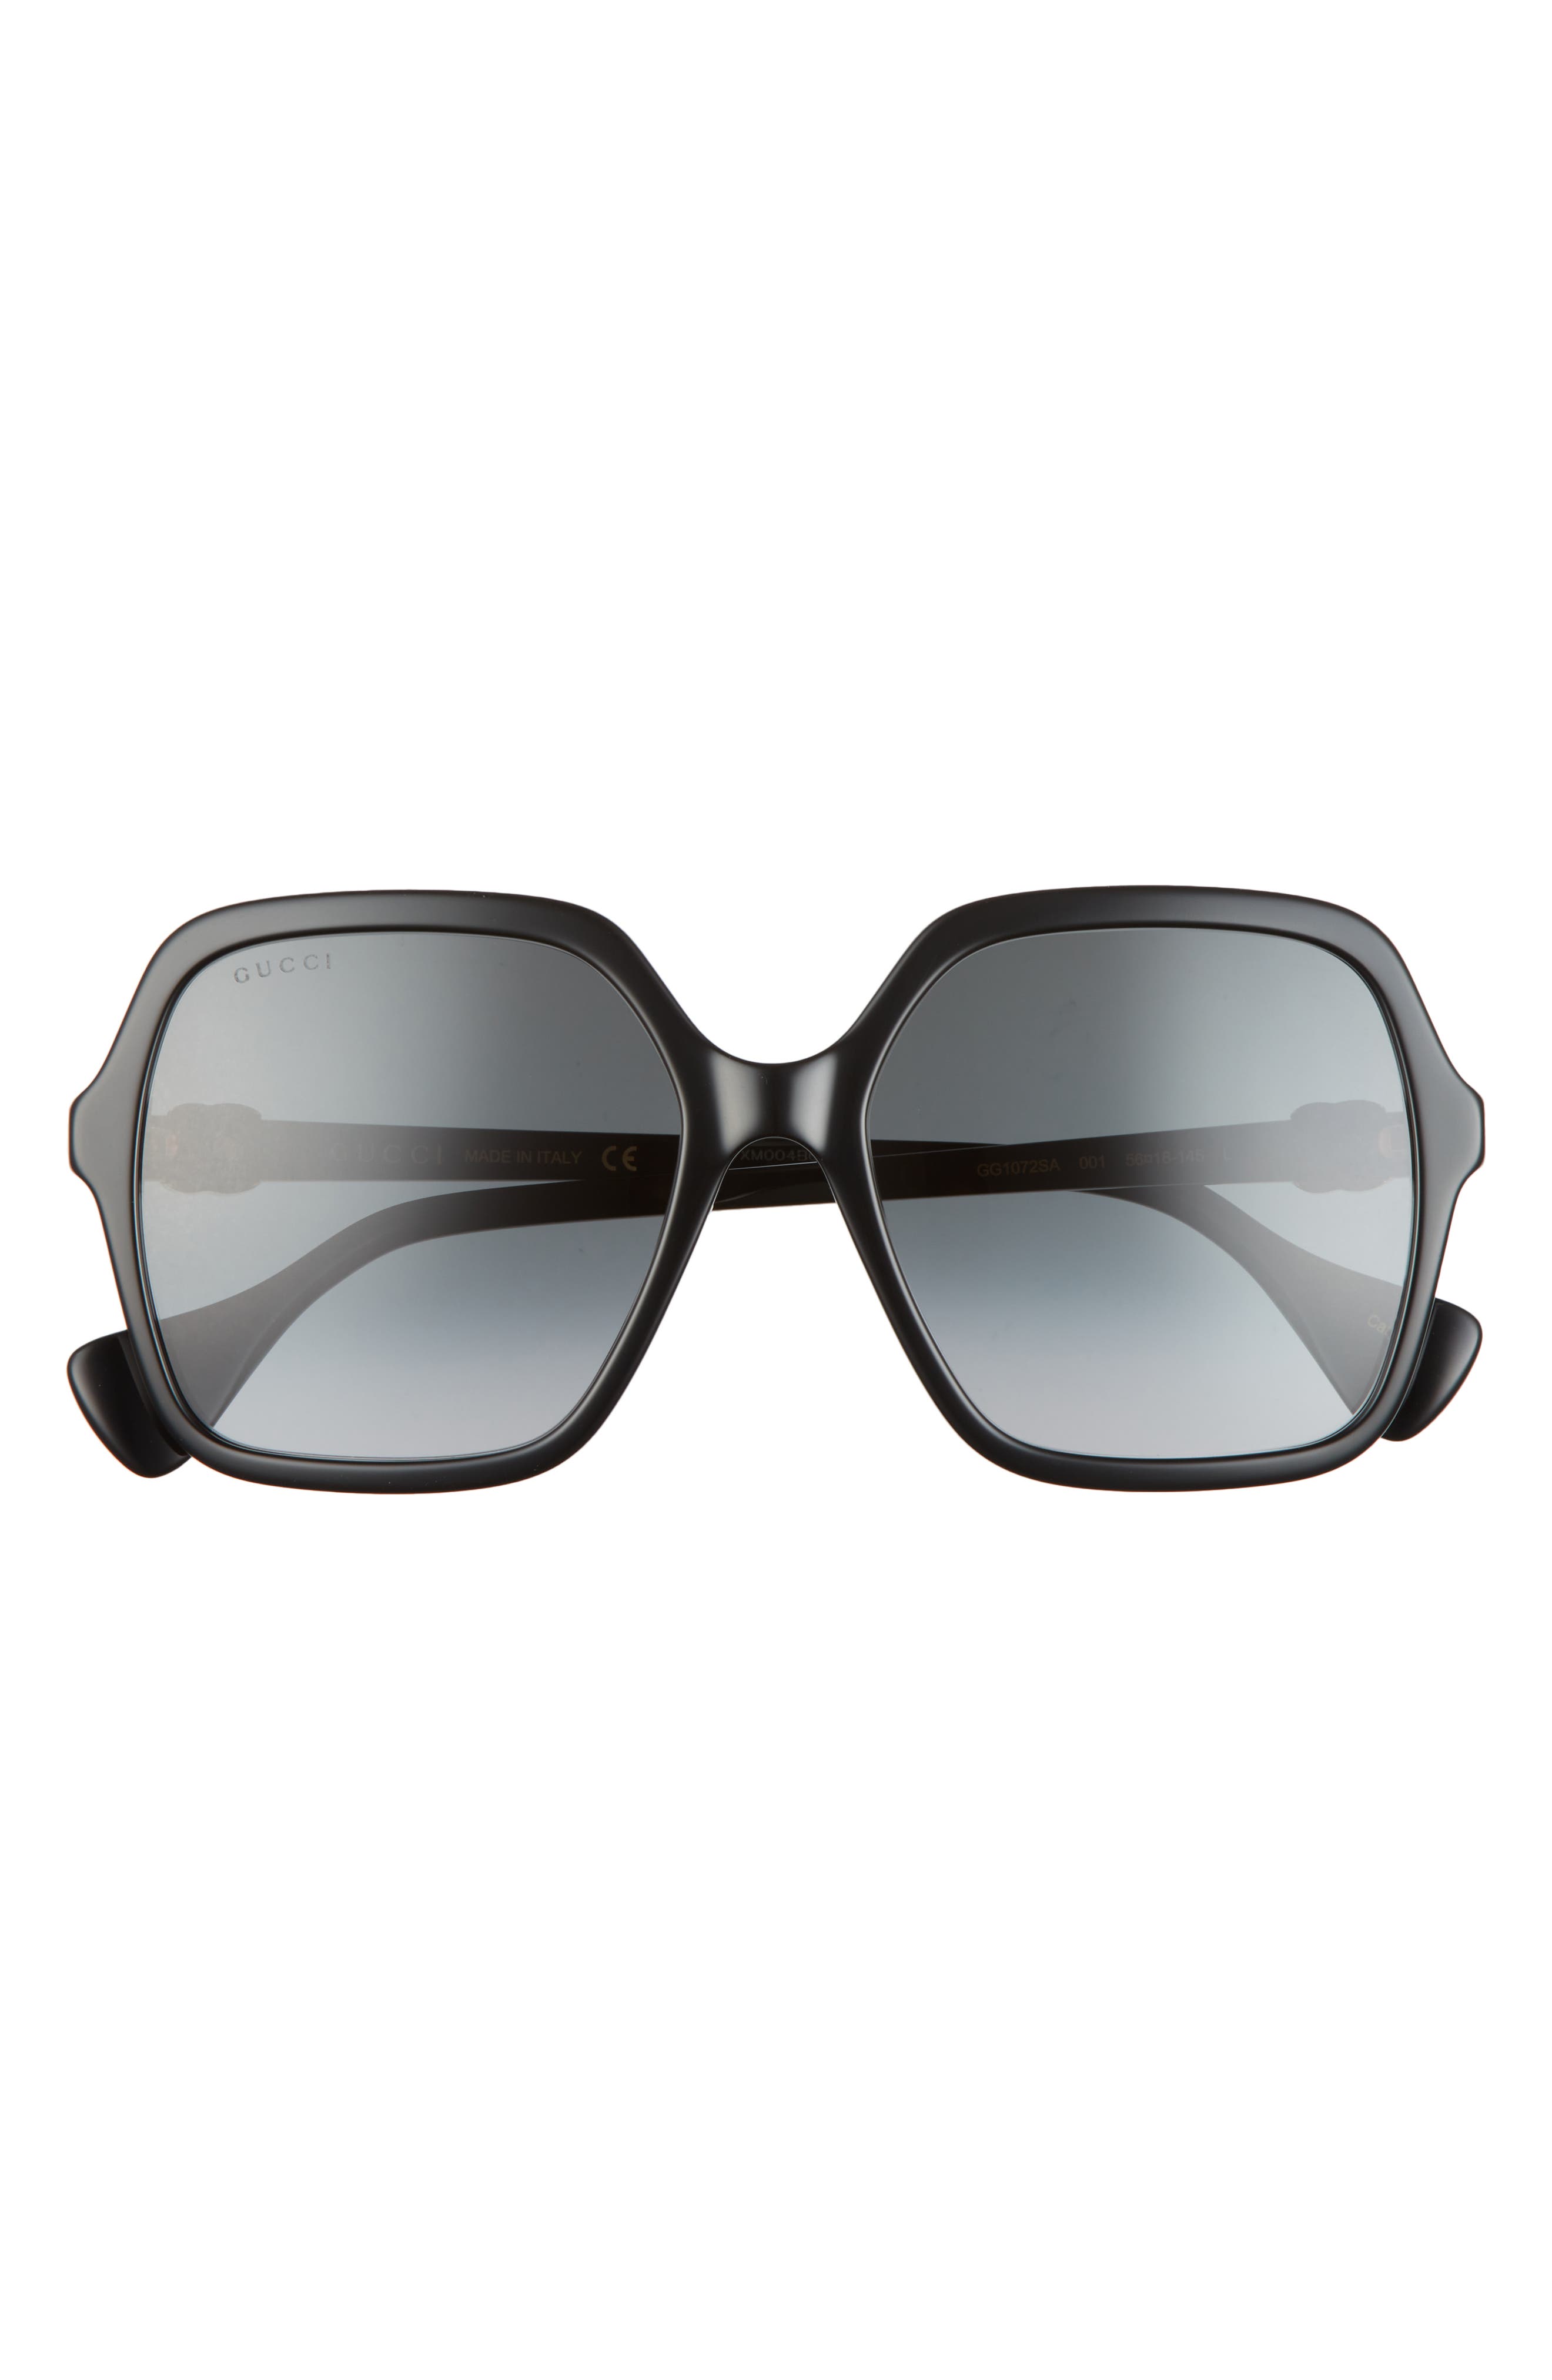 Gucci 56mm Square Sunglasses in Black at Nordstrom